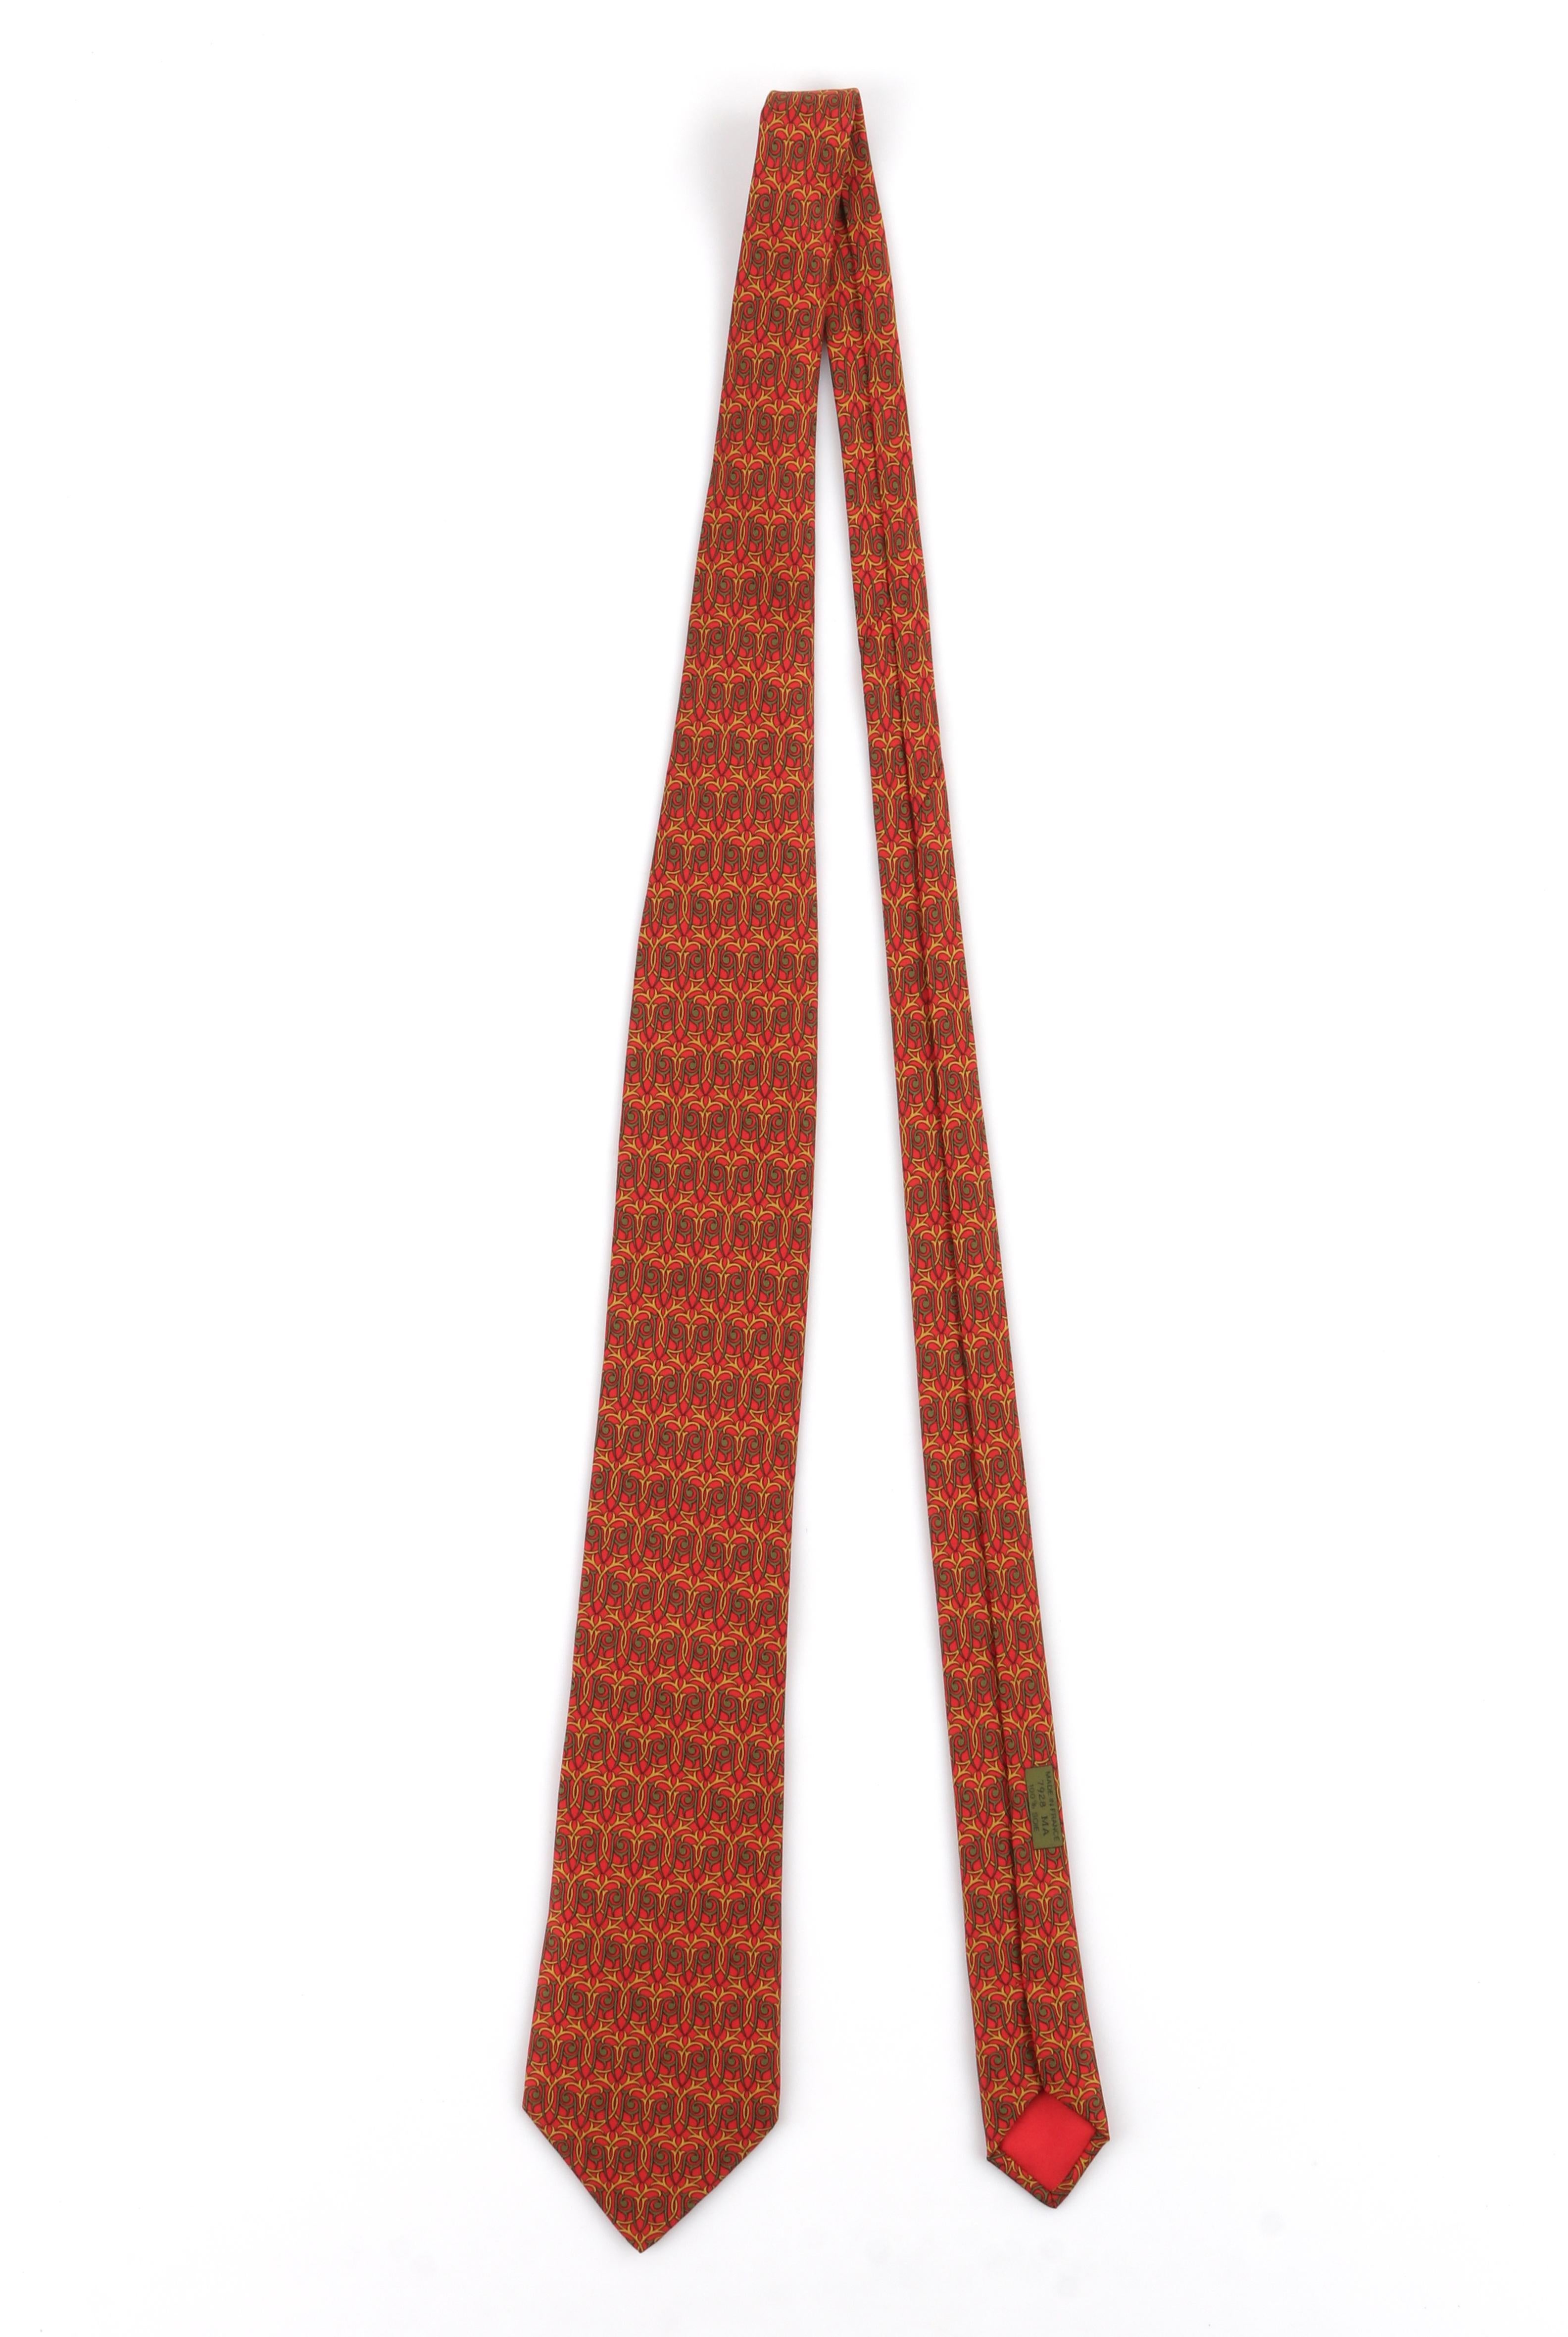 Brown HERMES Men’s 7928 MA 5-Fold Red Green Yellow Intertwine Geometric Print Neck Tie